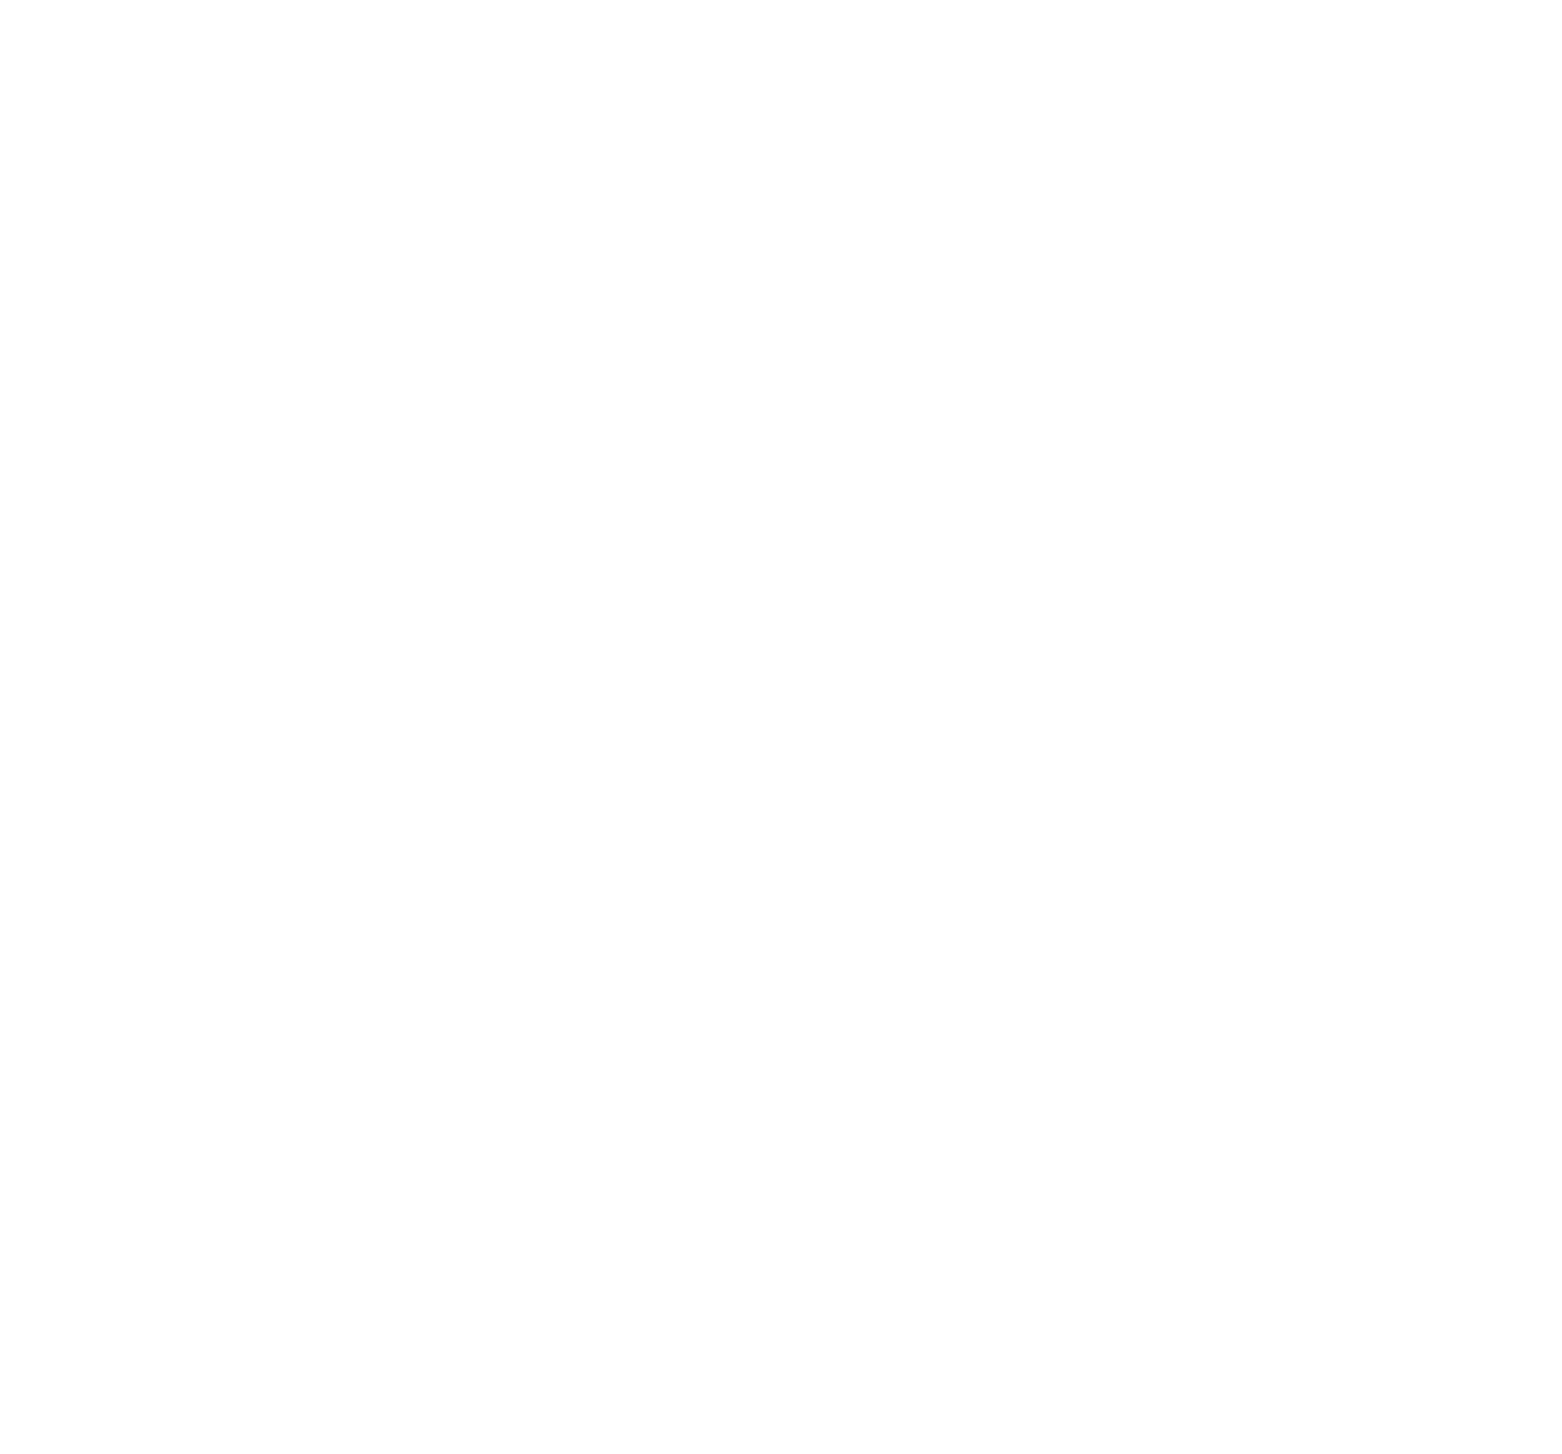 Satixfy Communications logo for dark backgrounds (transparent PNG)